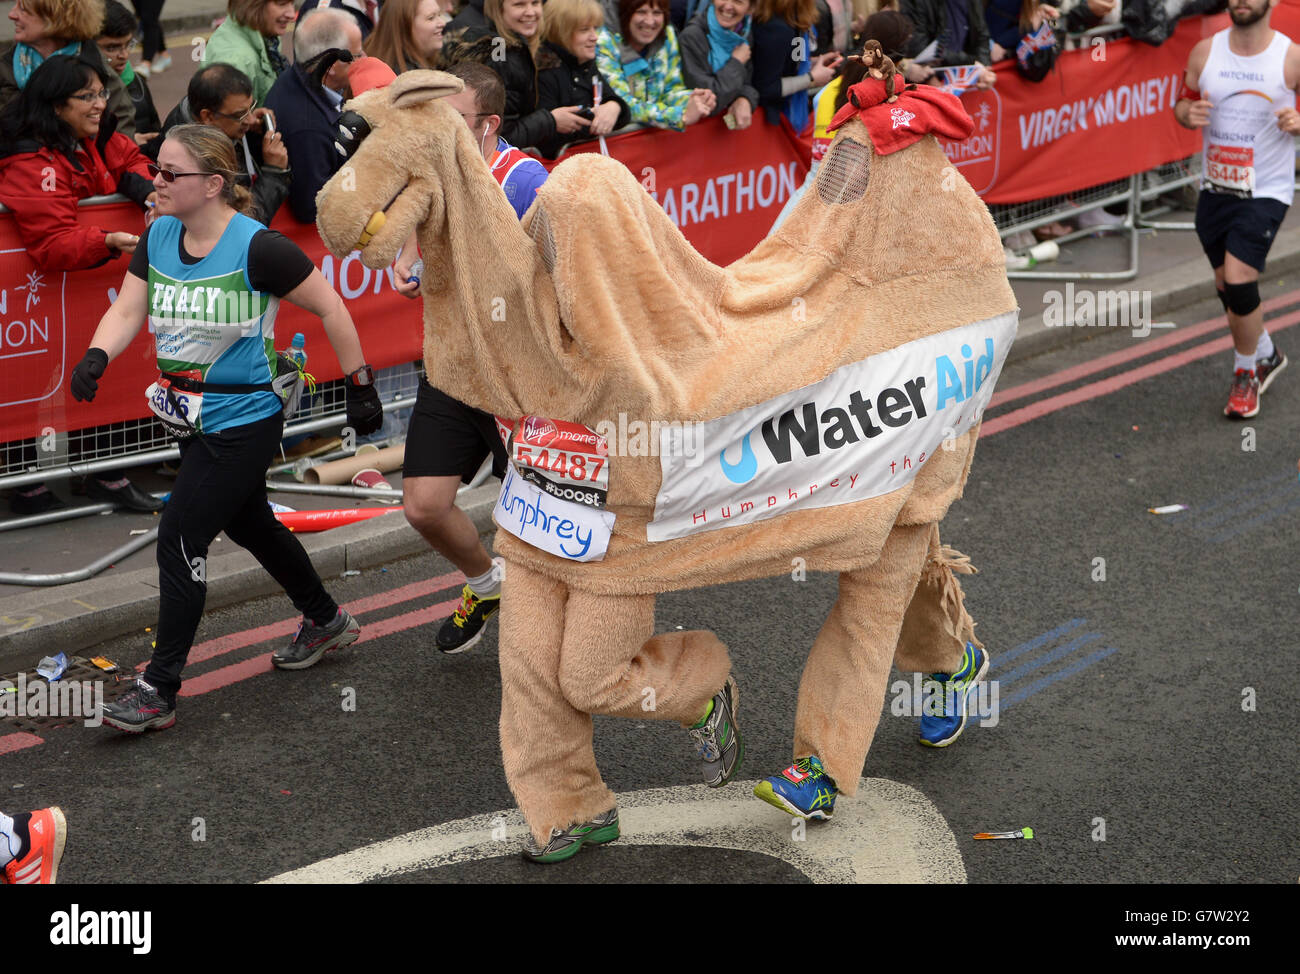 Athlétisme - Virgin Money Marathon de Londres 2015.Marathon Runners en robe fantaisie lors du marathon de Londres Virgin Money 2015. Banque D'Images